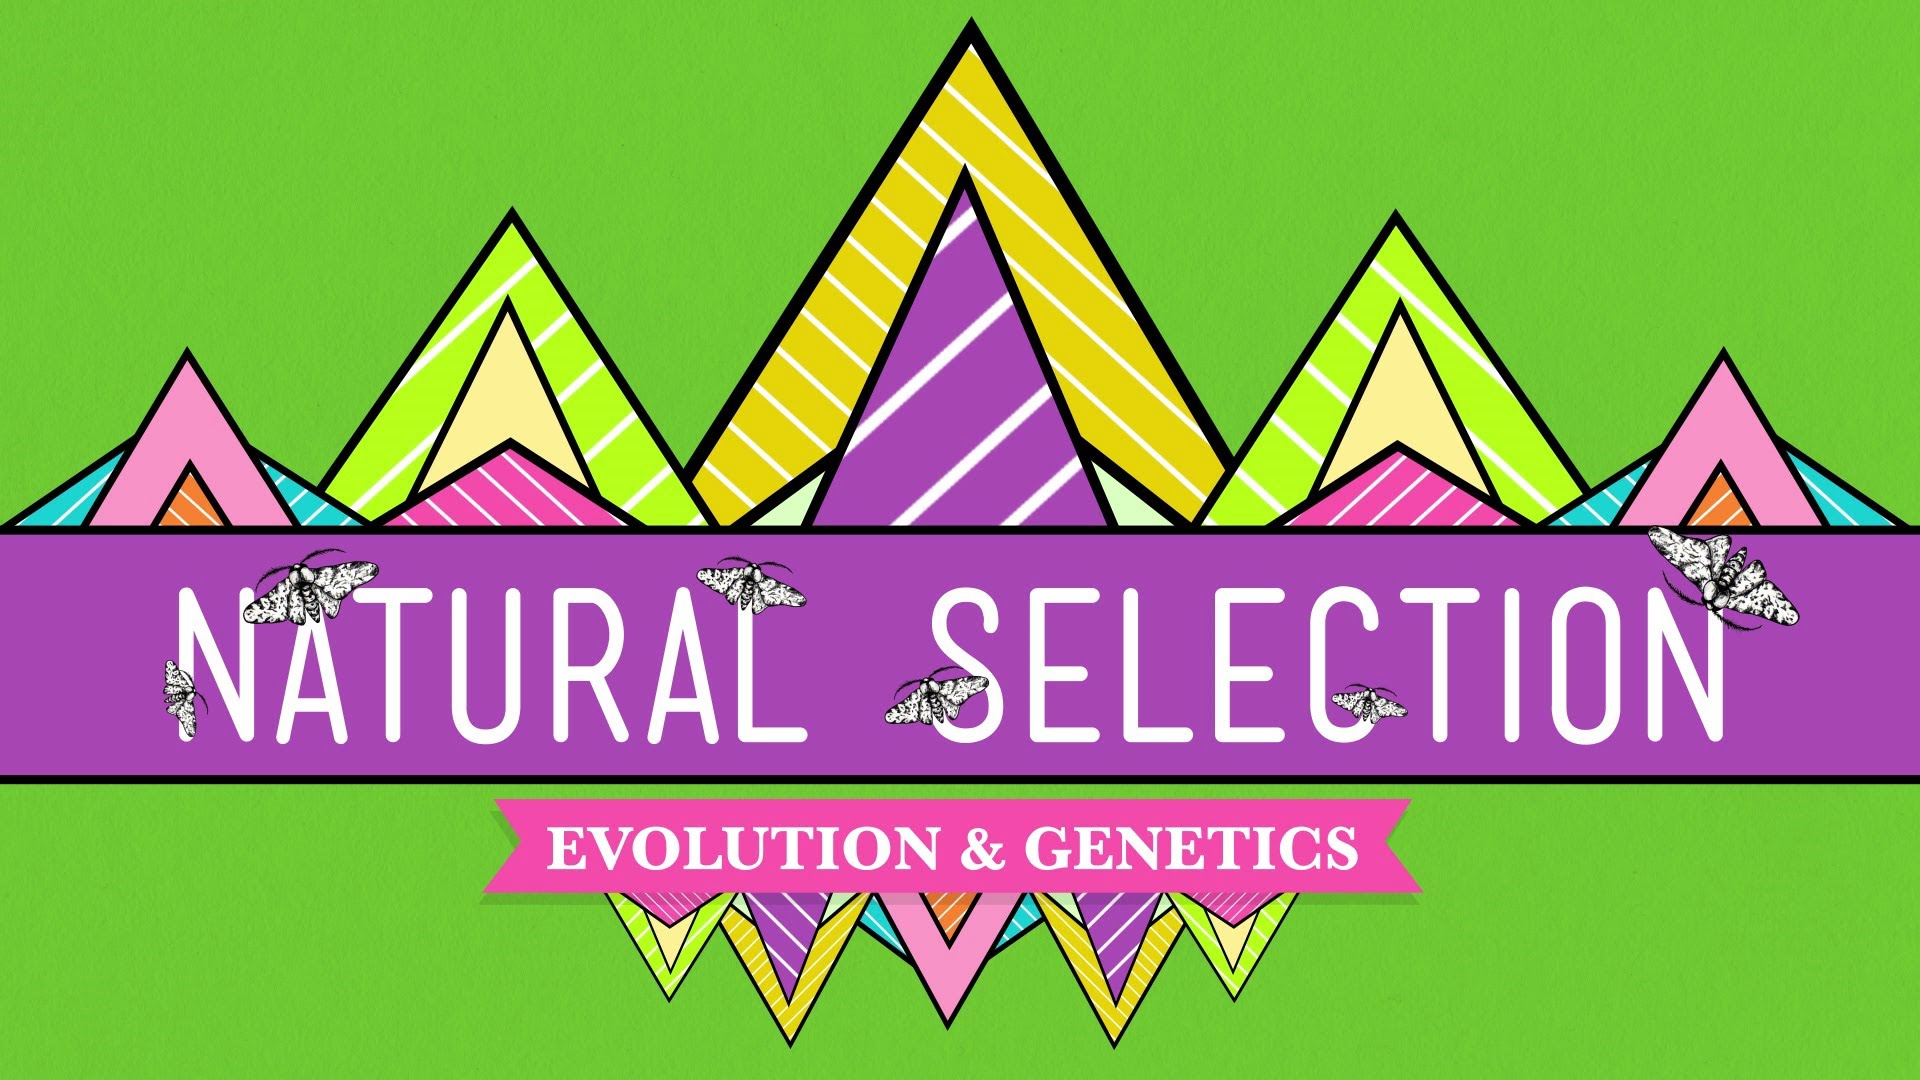 Natural Selection HD wallpapers, Desktop wallpaper - most viewed